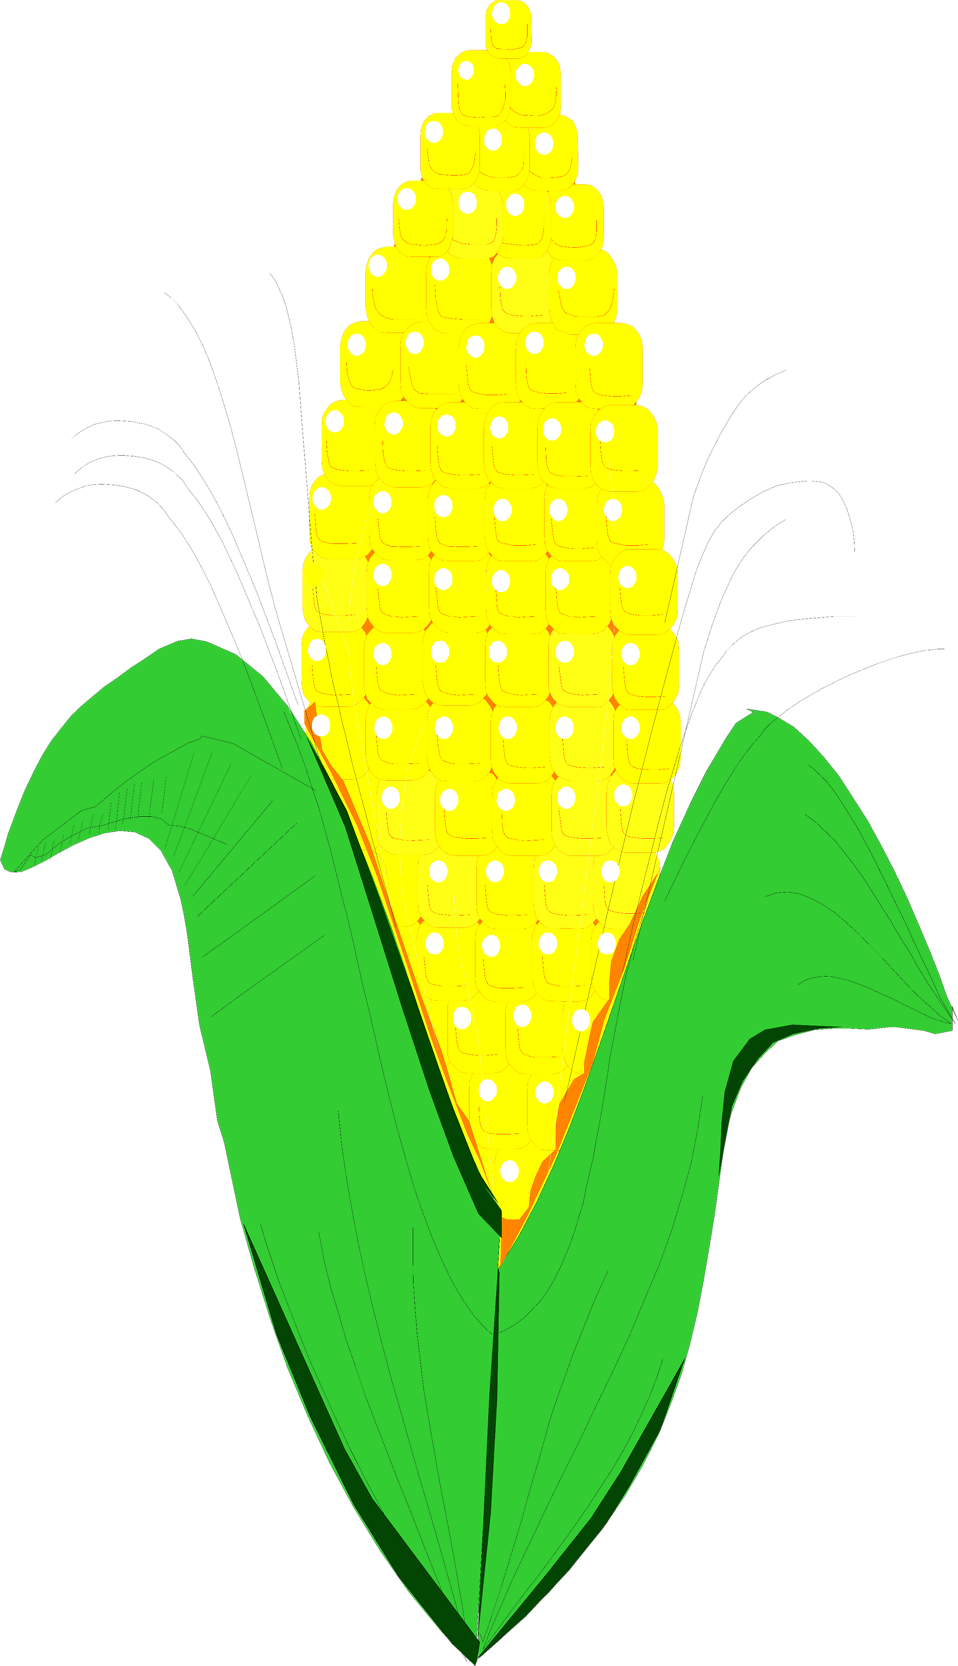 Corn   Free Stock Photo   Illustration Of An Ear Of Corn     8476